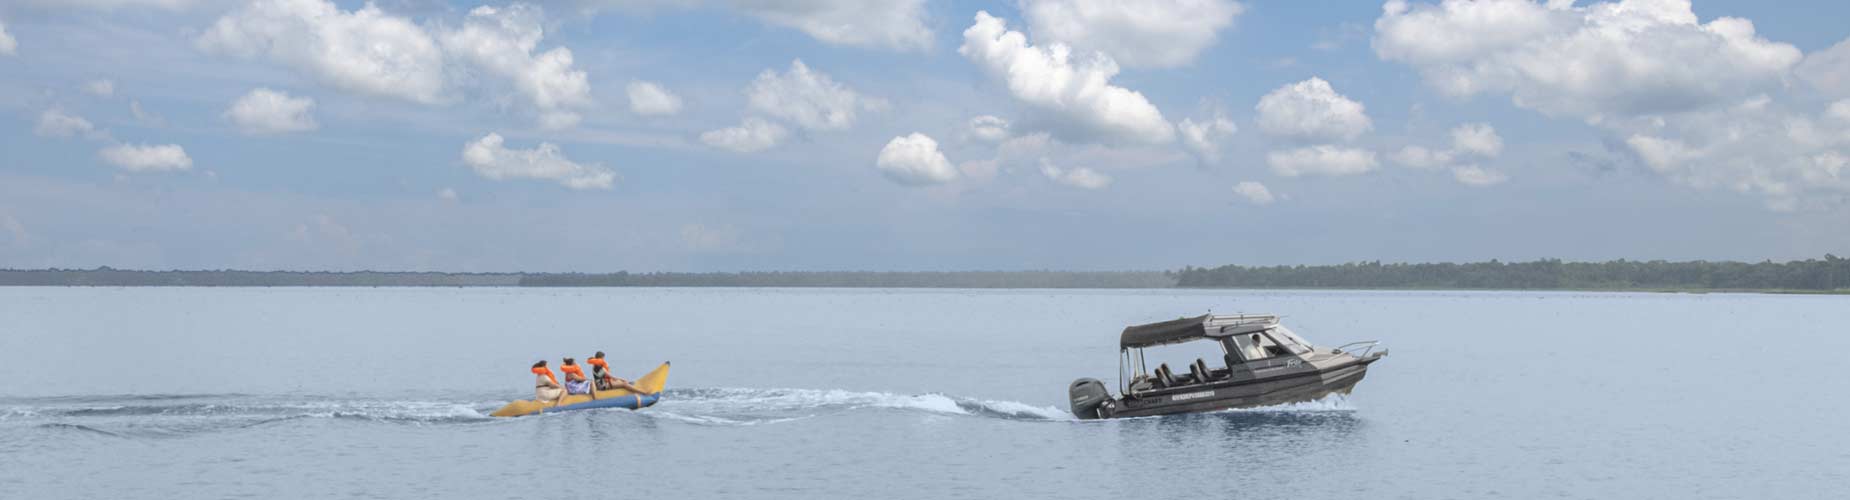 Luxury Experiences - Kumarakom Lake Resort